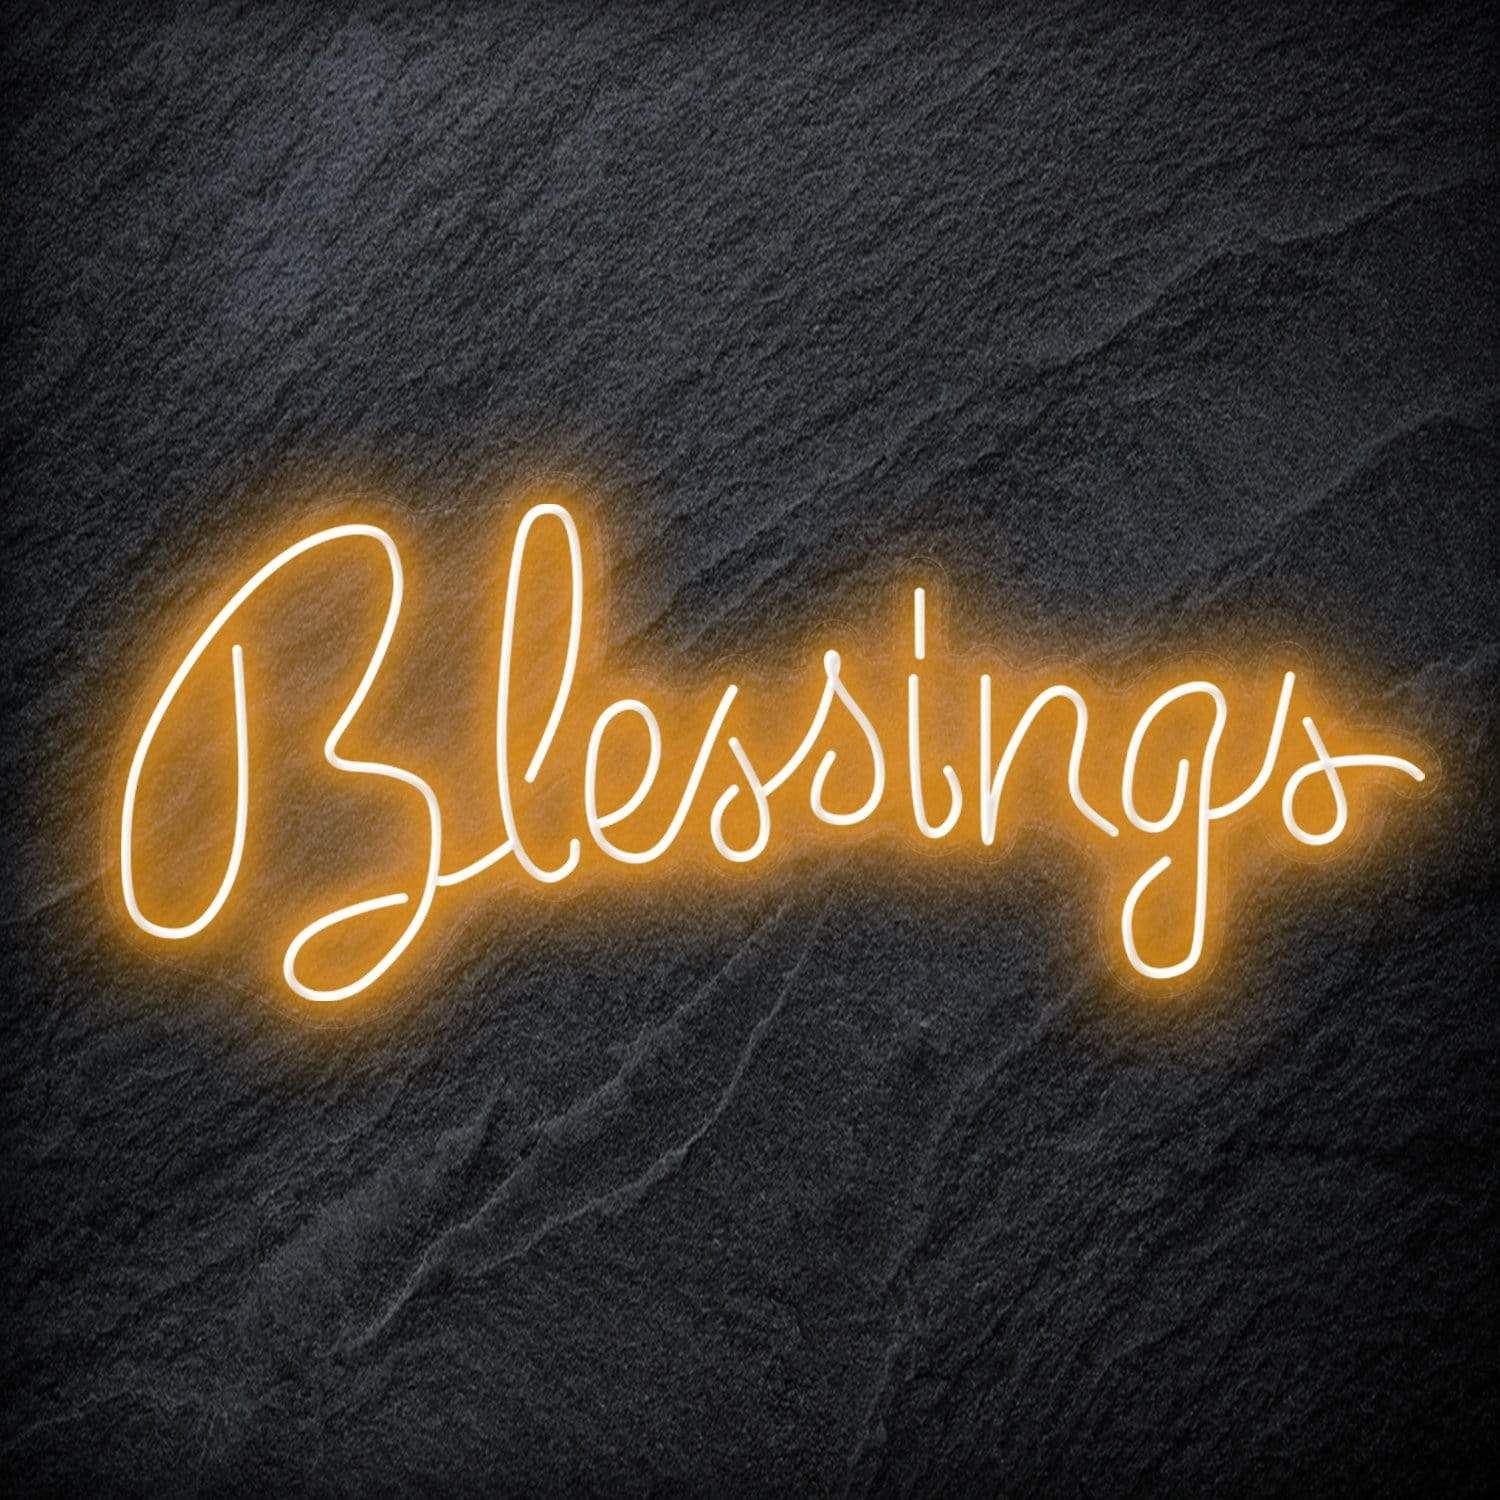 "Blessings" LED Neon Sign Schriftzug - NEONEVERGLOW